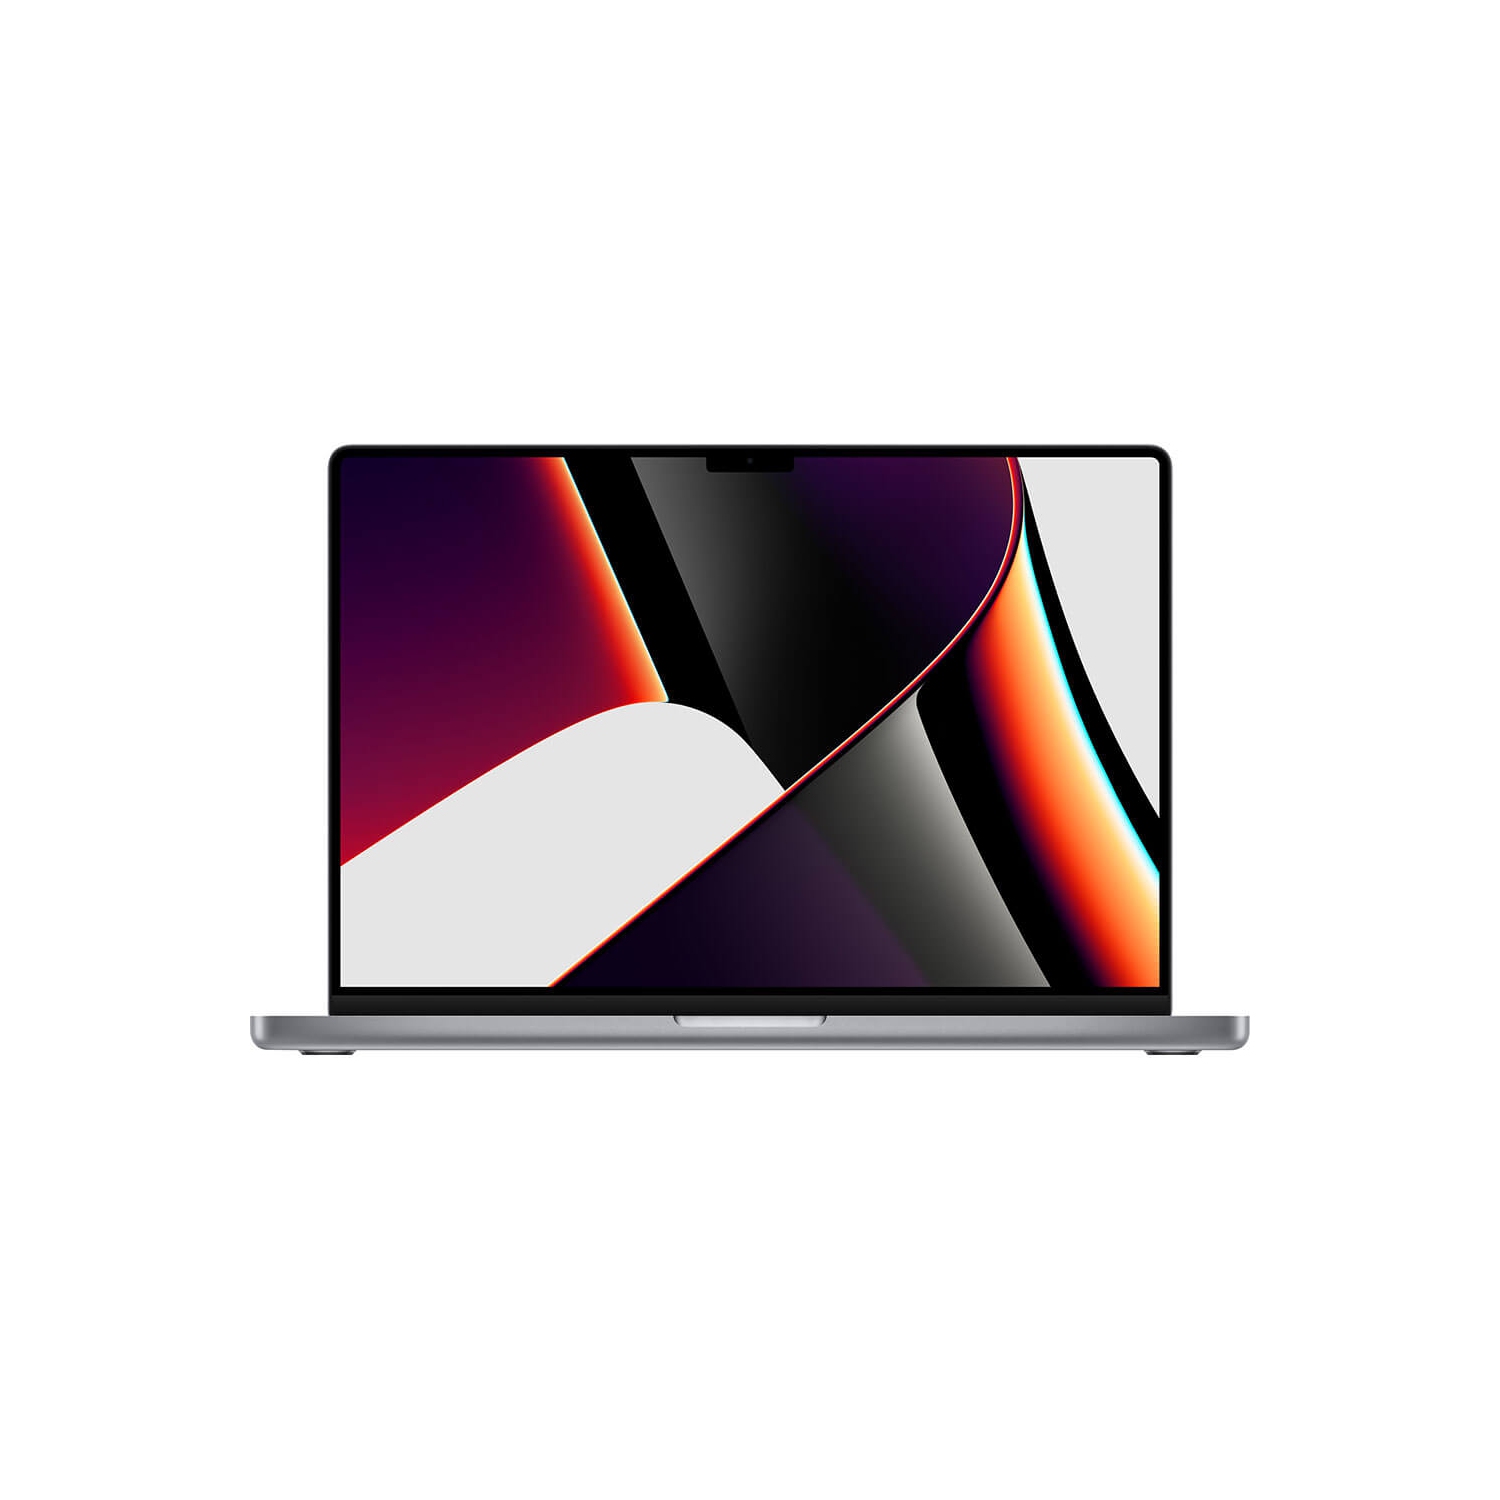 Apple MacBook Pro 14" (2021) - Space Grey (Apple M1 Pro Chip / 512GB SSD / 16GB RAM)- English - Apple Care+ Expires Jan 2025 -Open Box